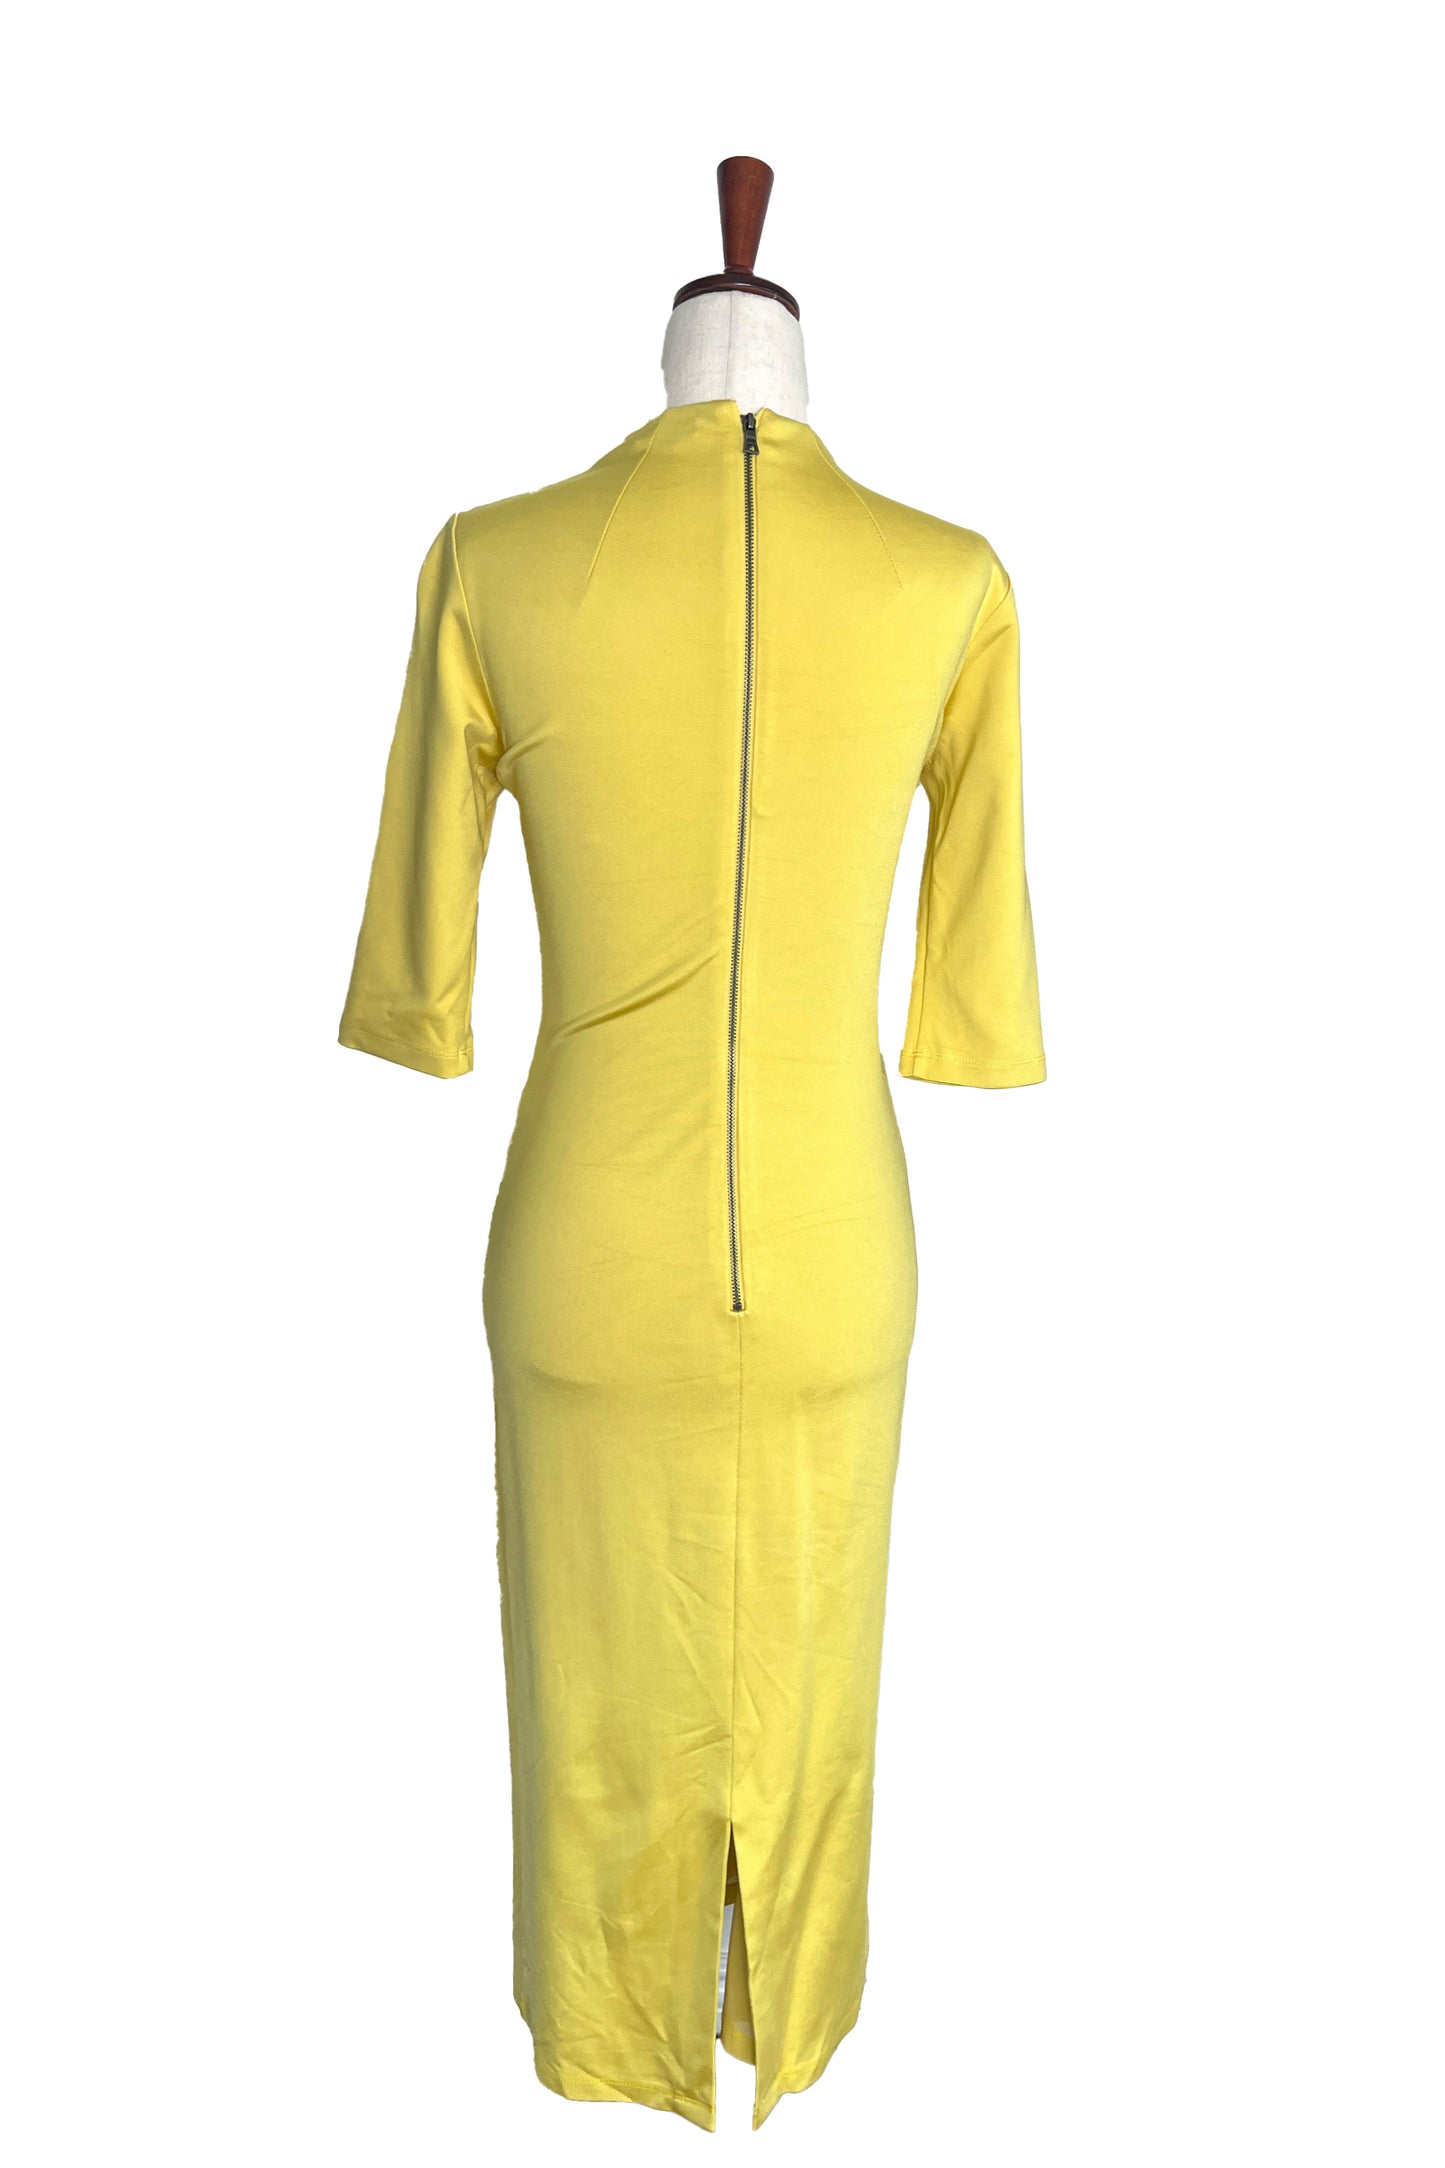 ALICE & OLIVIA - Yellow Mock Neck Midi Length Dress - Size 4